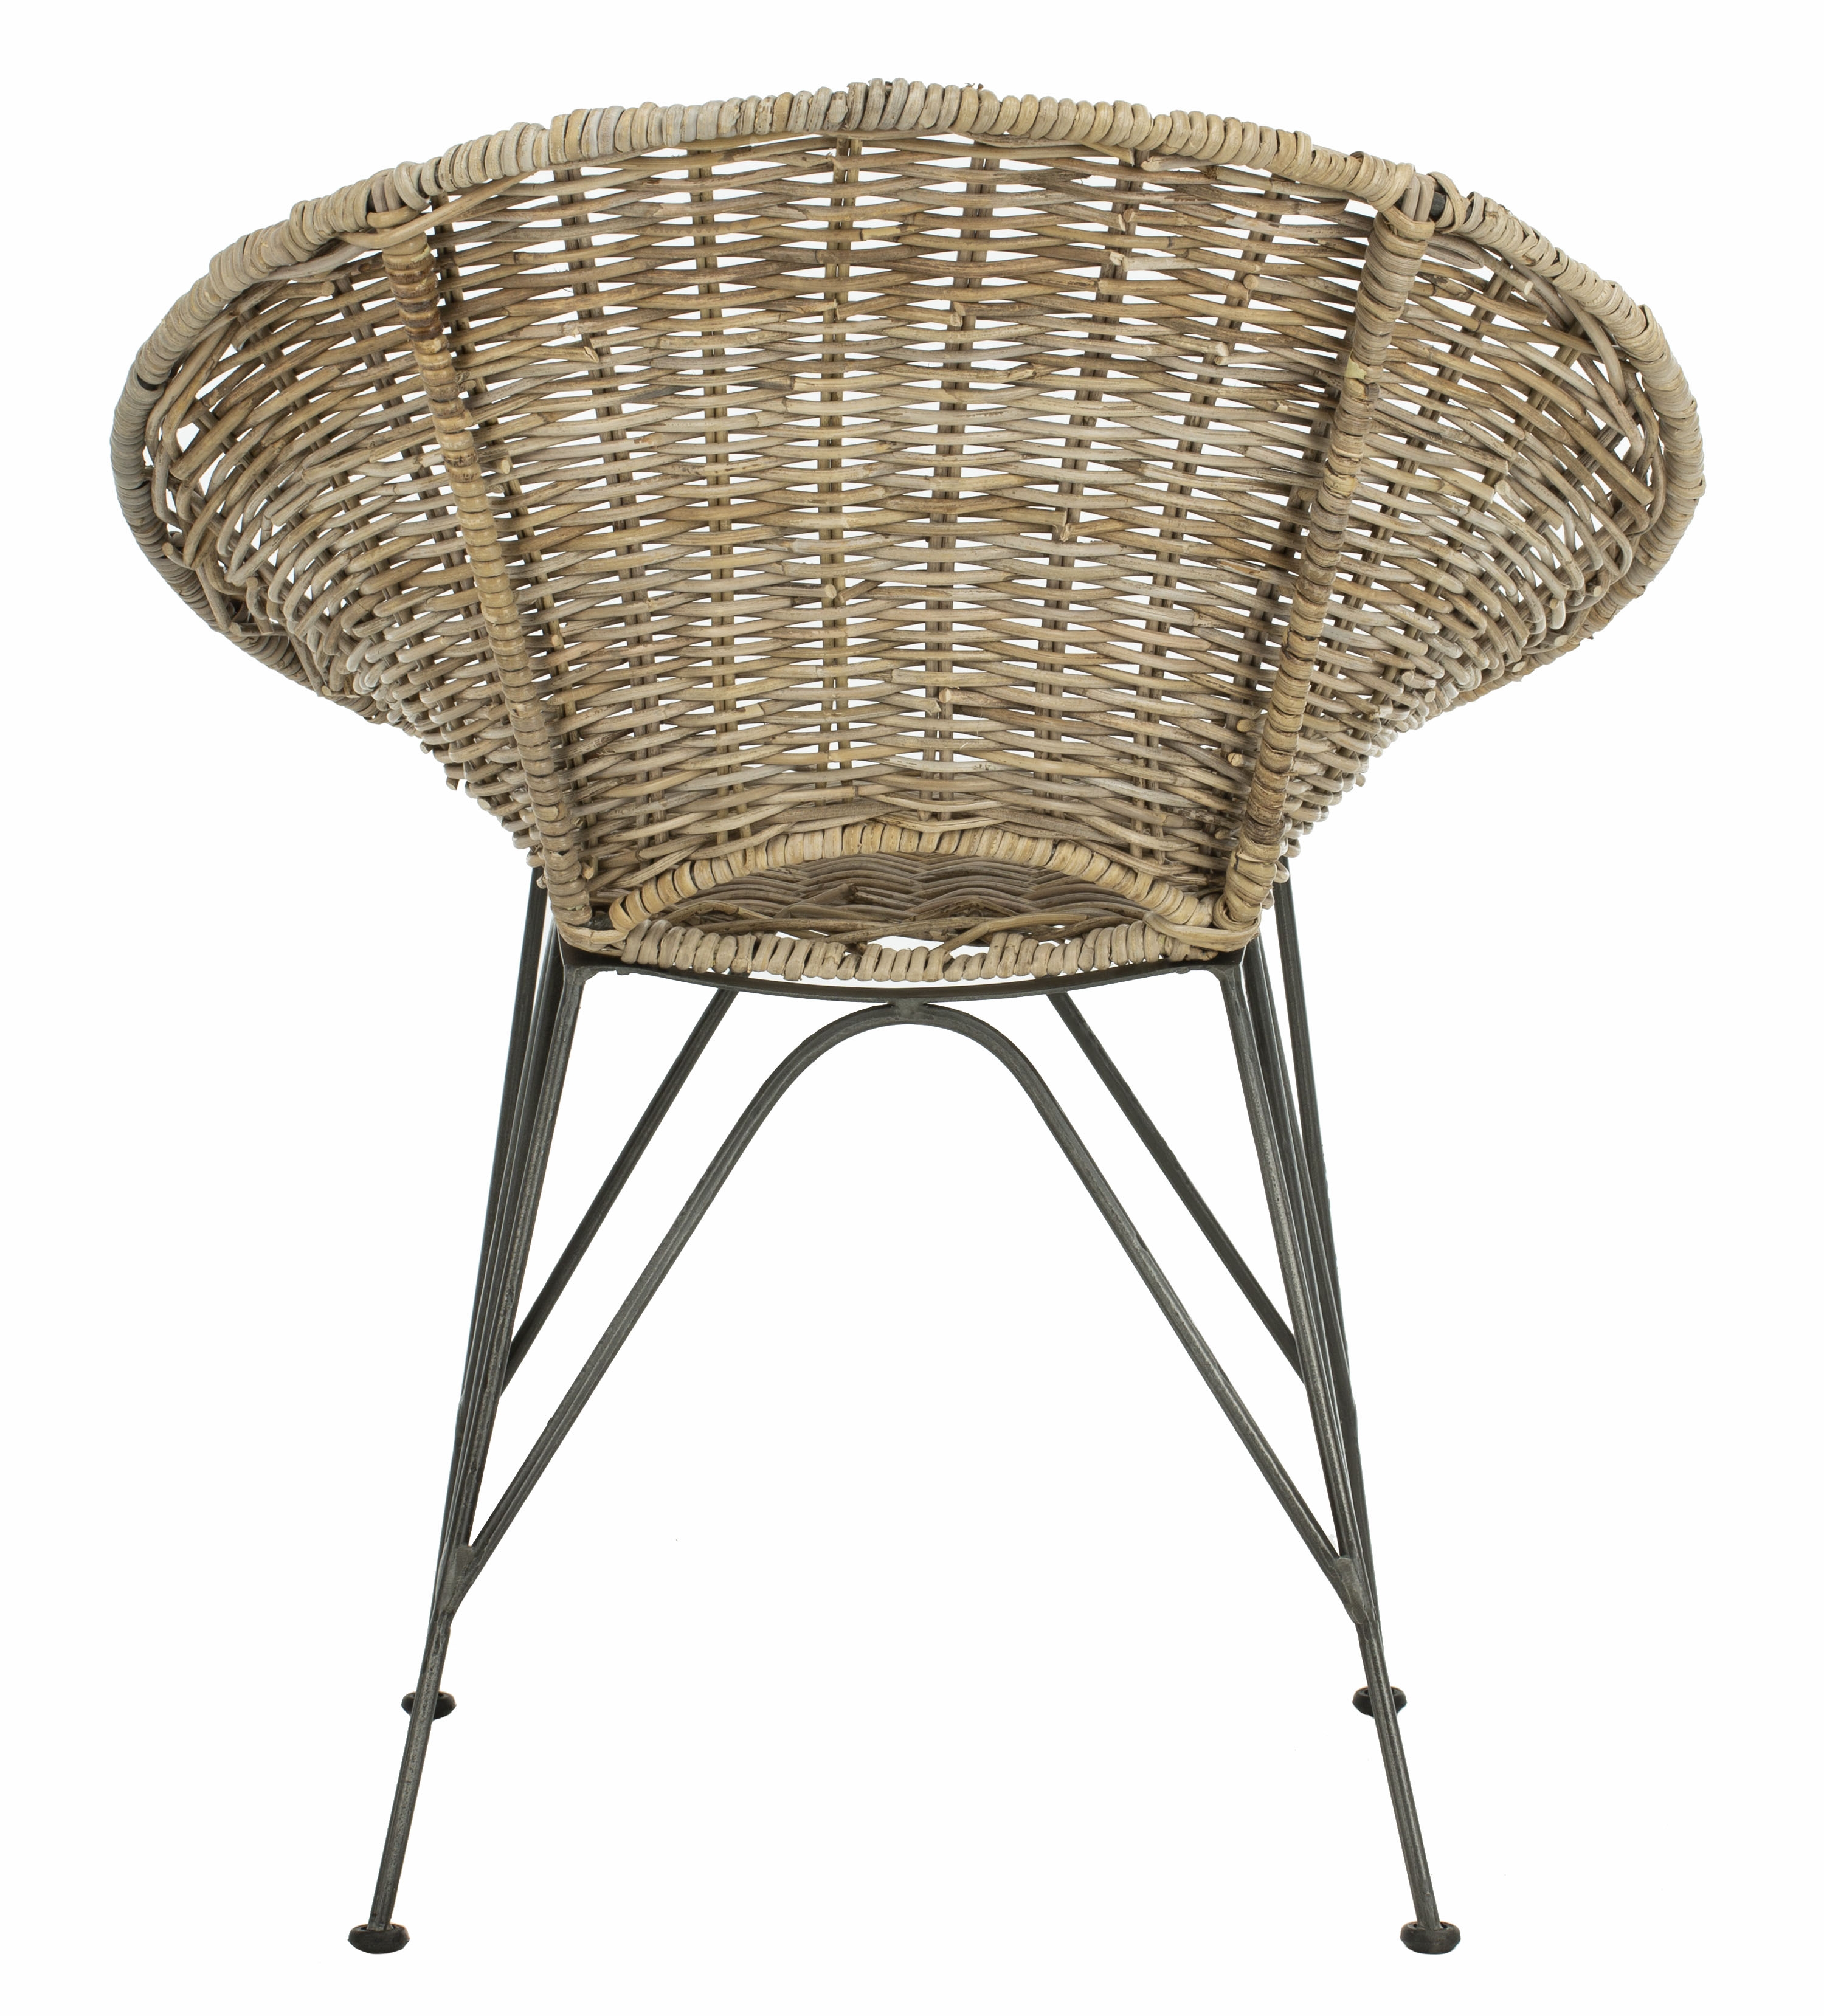 Henrik Chair - Image 2